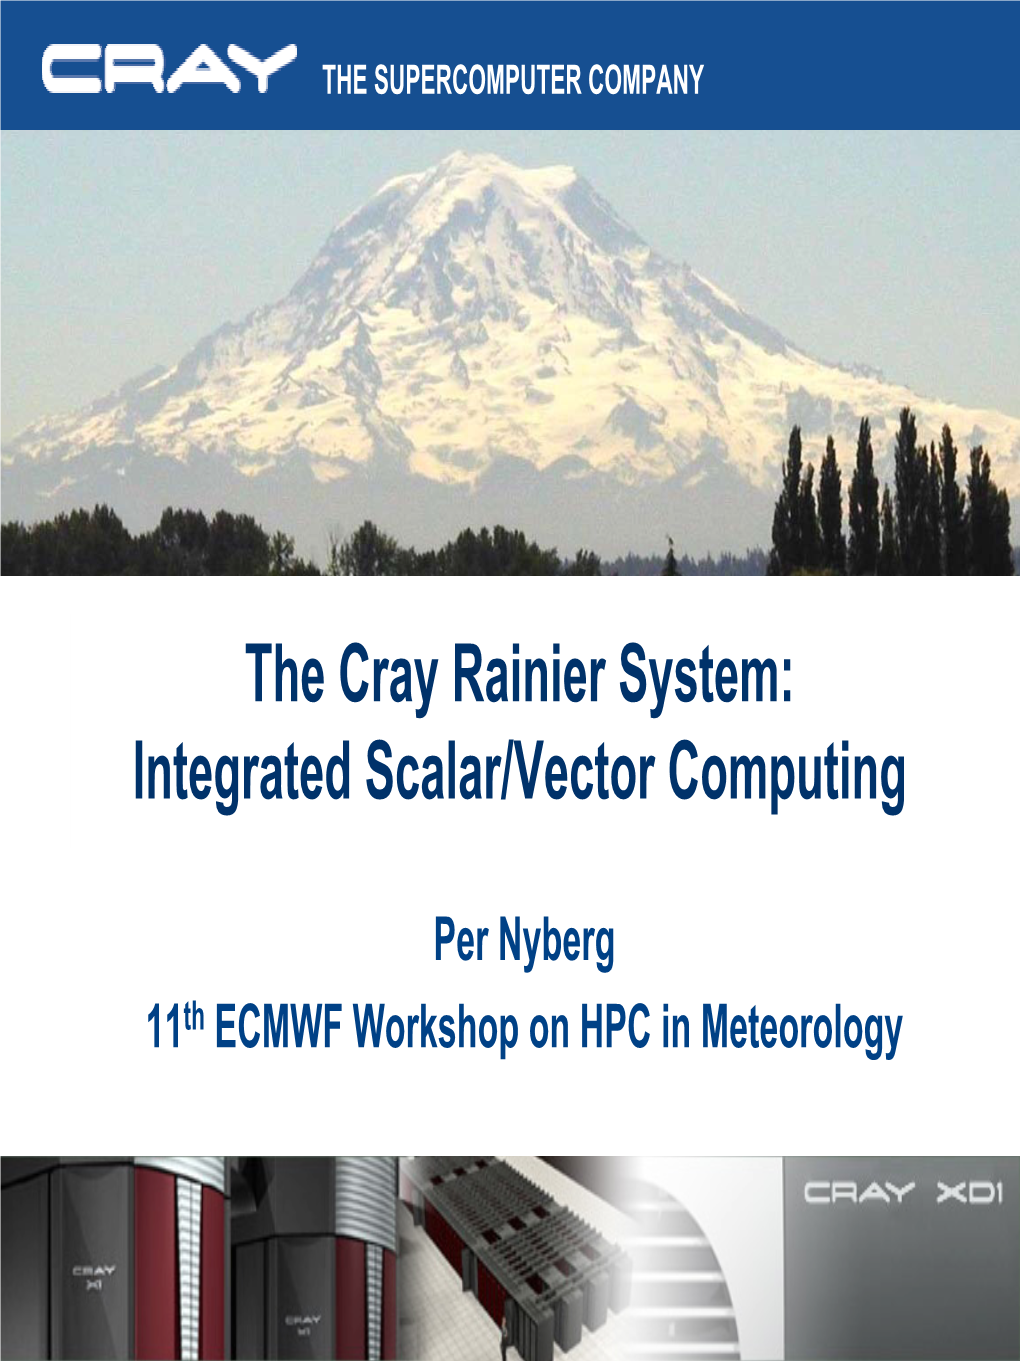 The Cray Rainier System: Integrated Scalar/Vector Computing